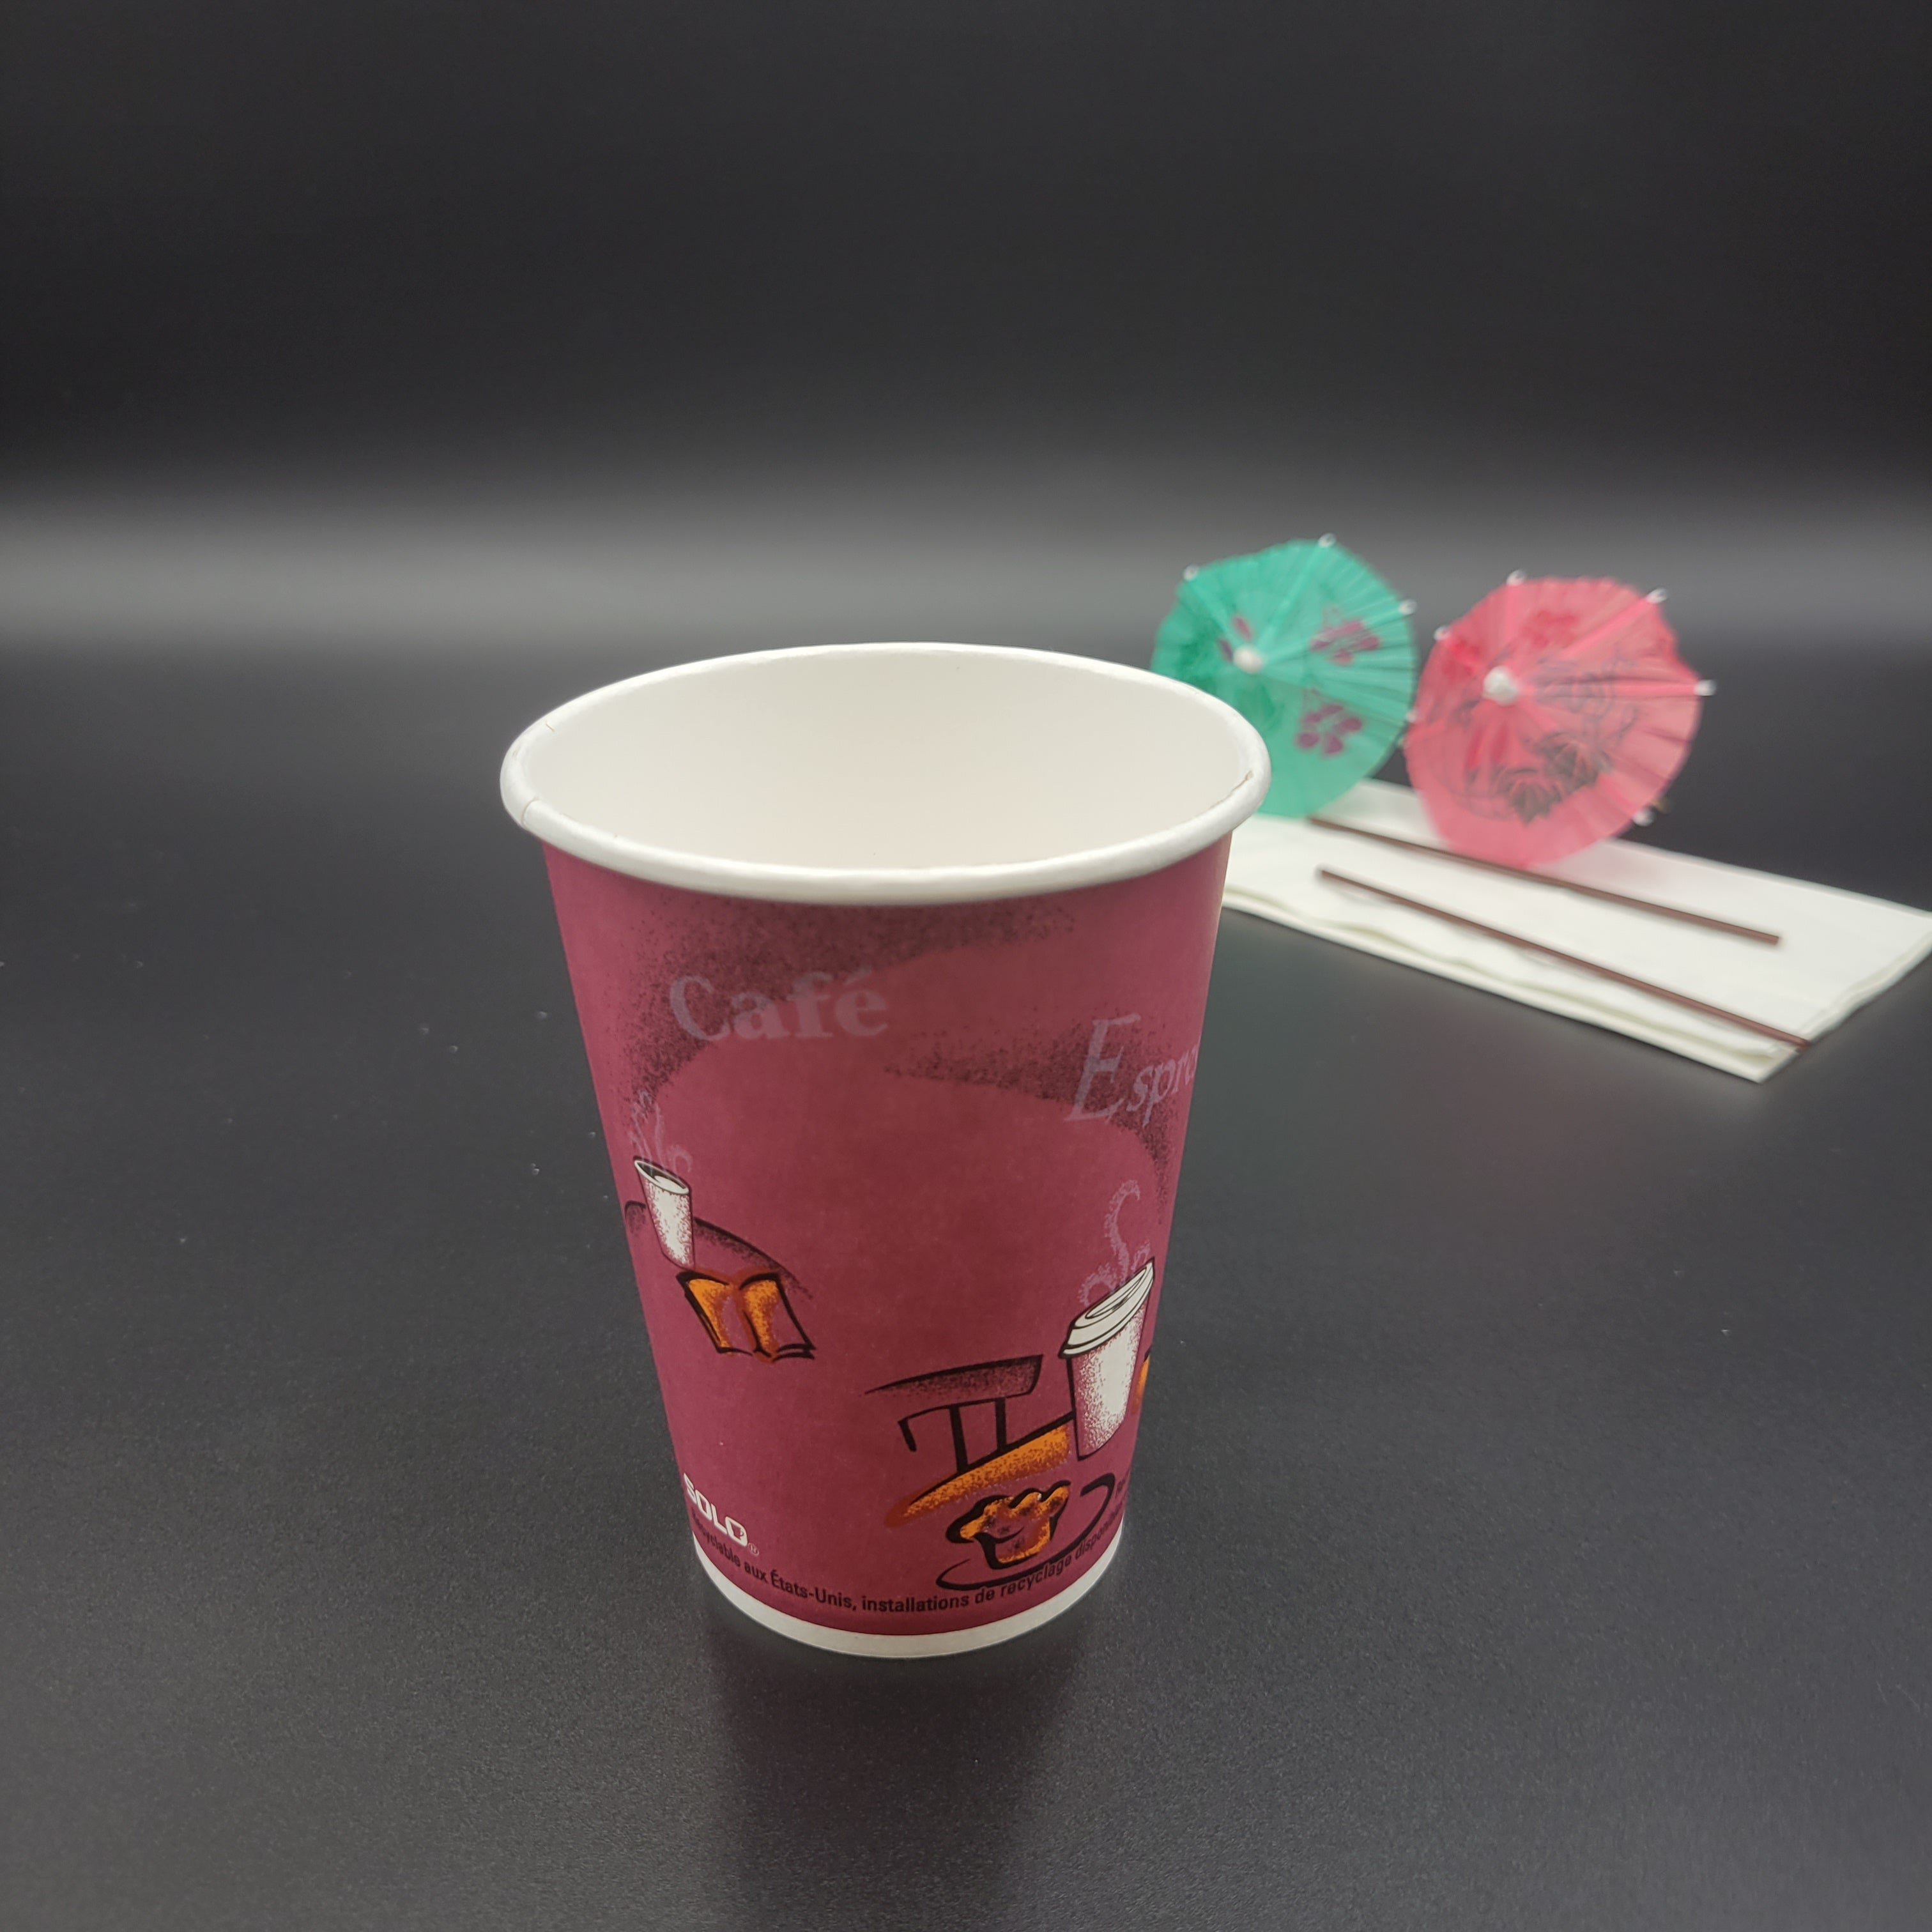 Solo Paper Hot Cup "Bistro" Print 12 oz. 412SIN-0041 - 1000/Case